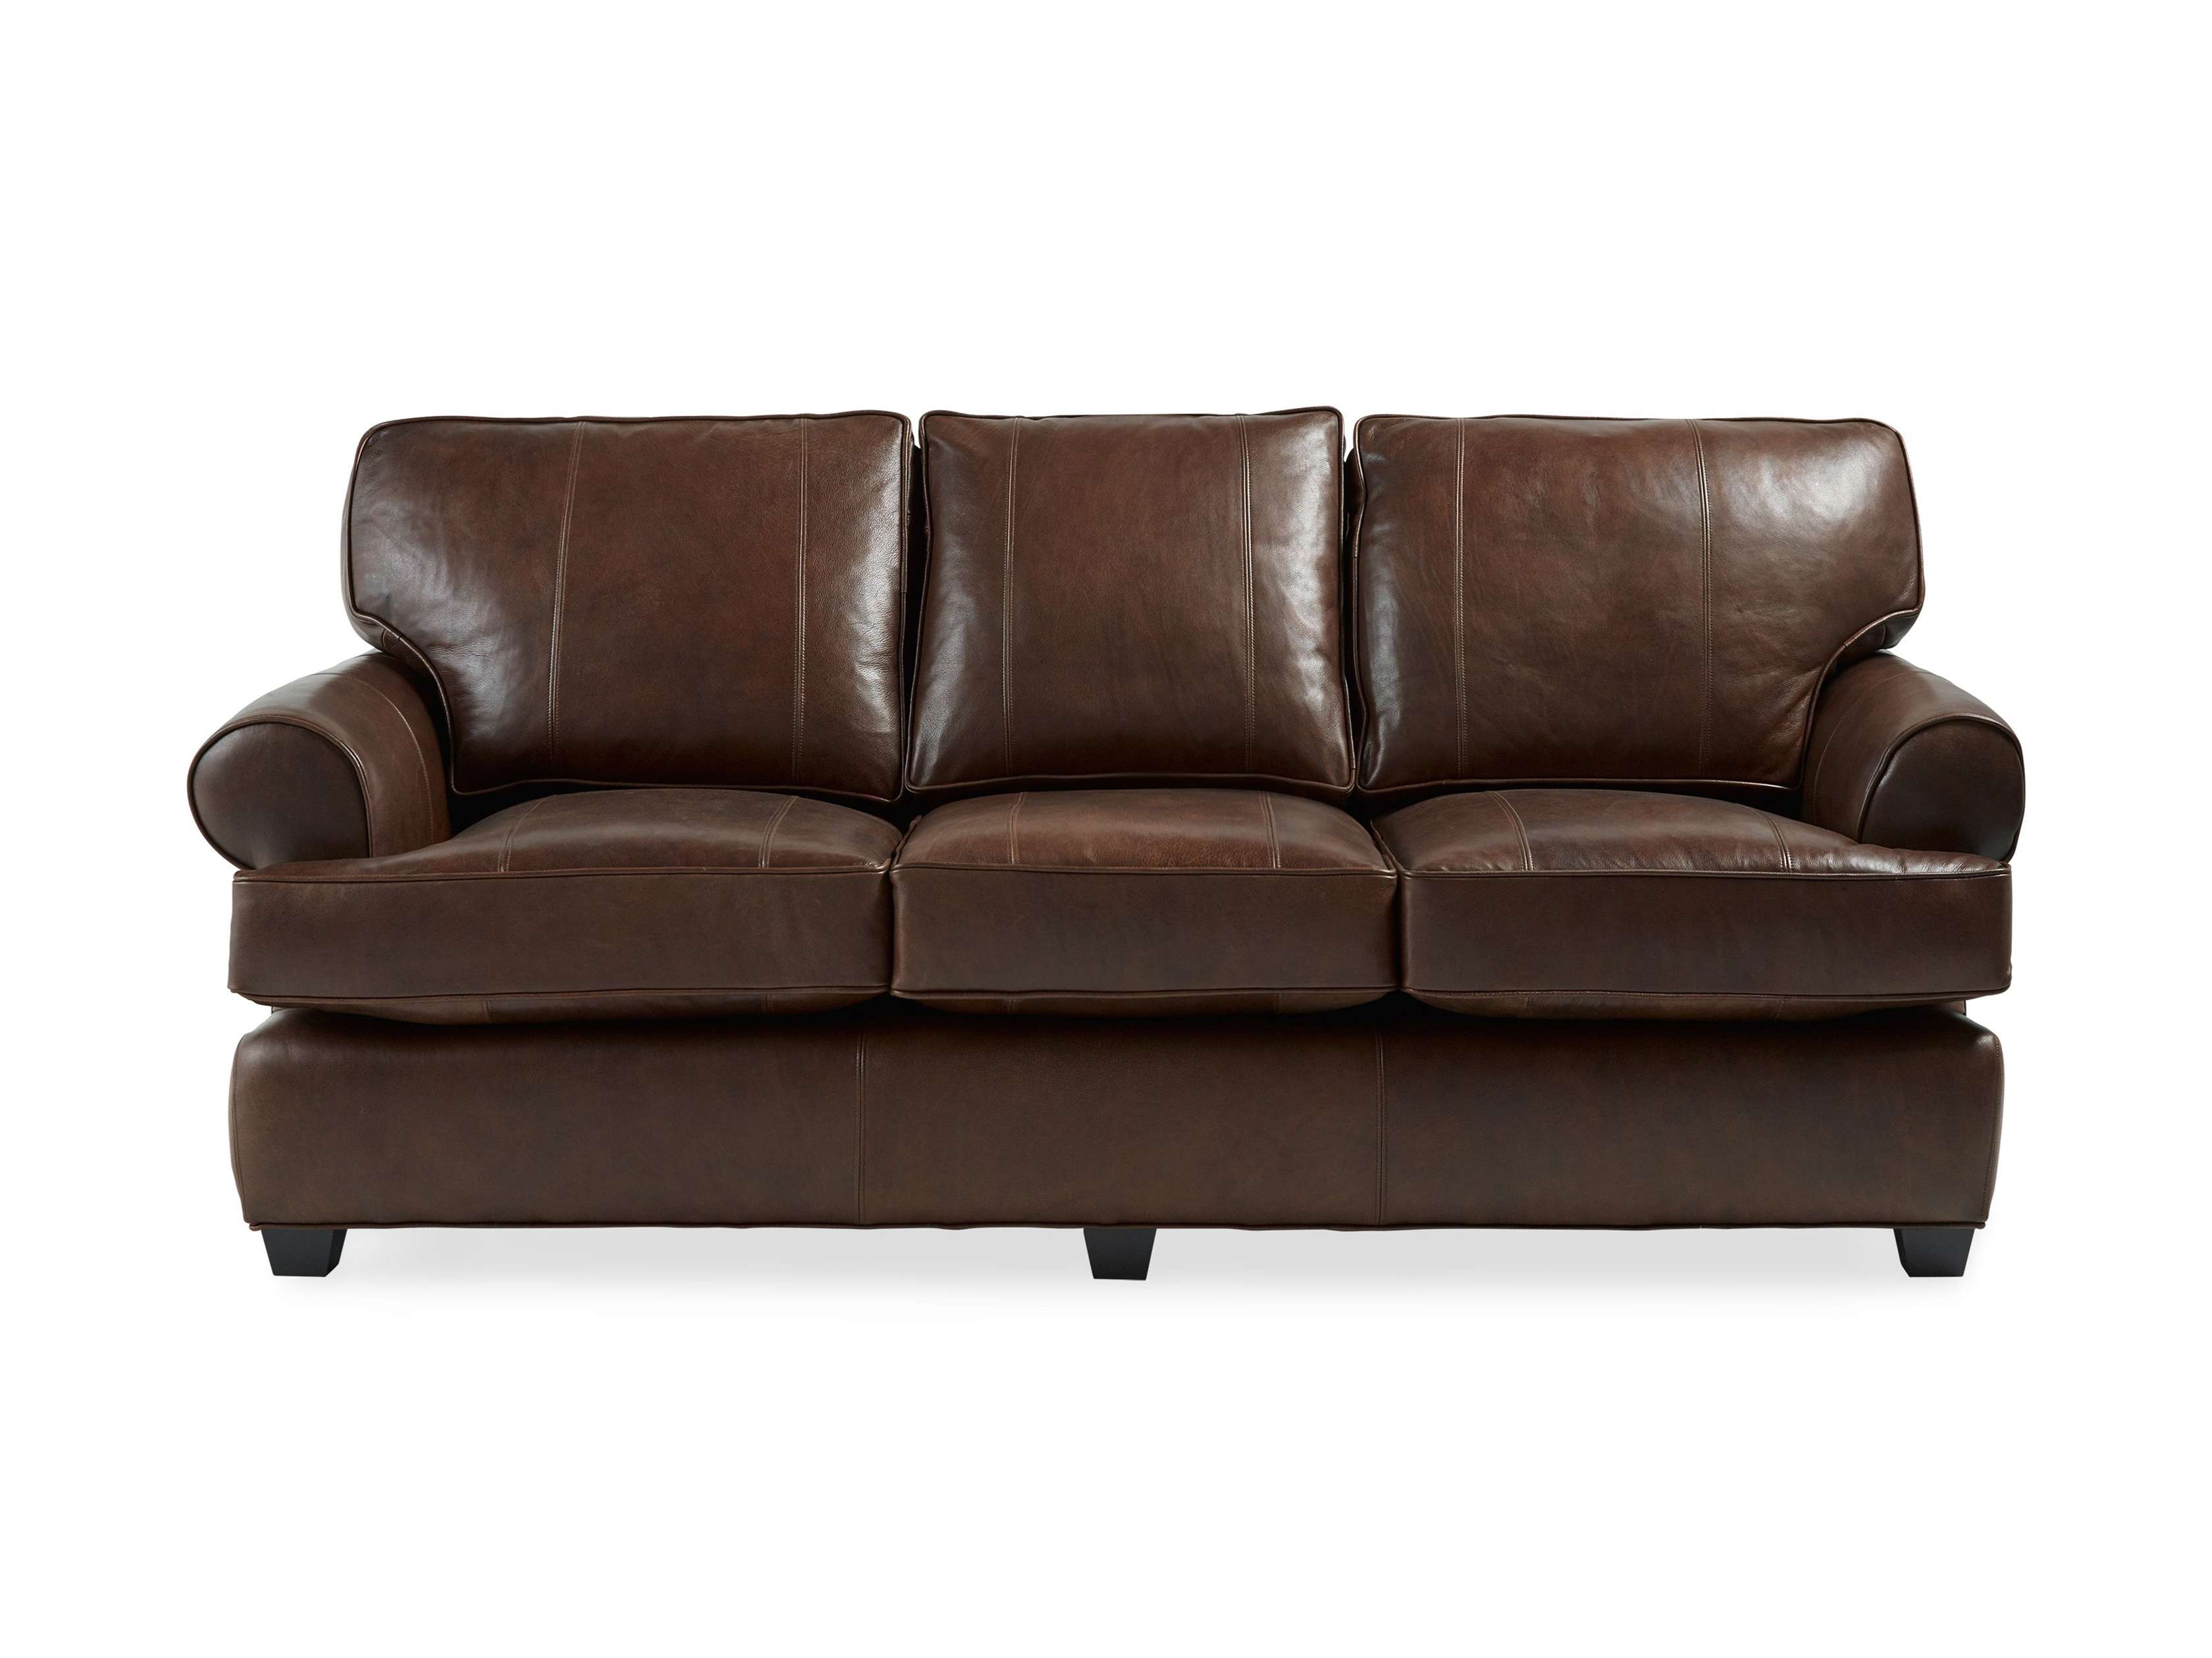 Hadley Leather Sofa Arhaus, Chocolate Leather Sectional Sofa